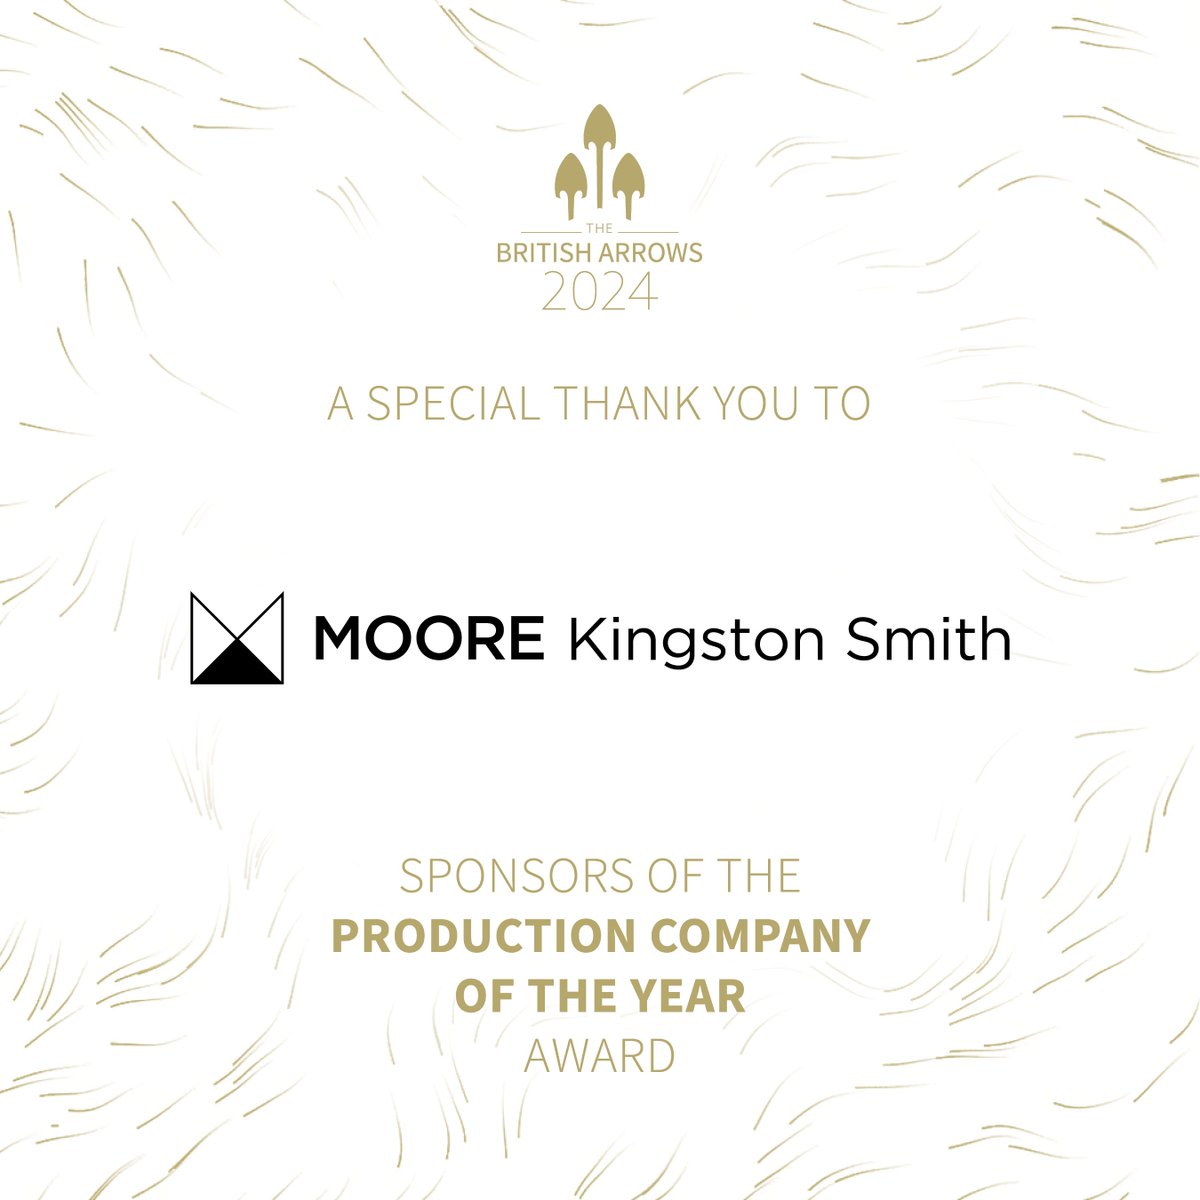 A special thank you to Moore Kingston Smith Sponsors of the Production Company of the Year Award #BA23 #BA23 #BritishArrows #advertising #award #celebration